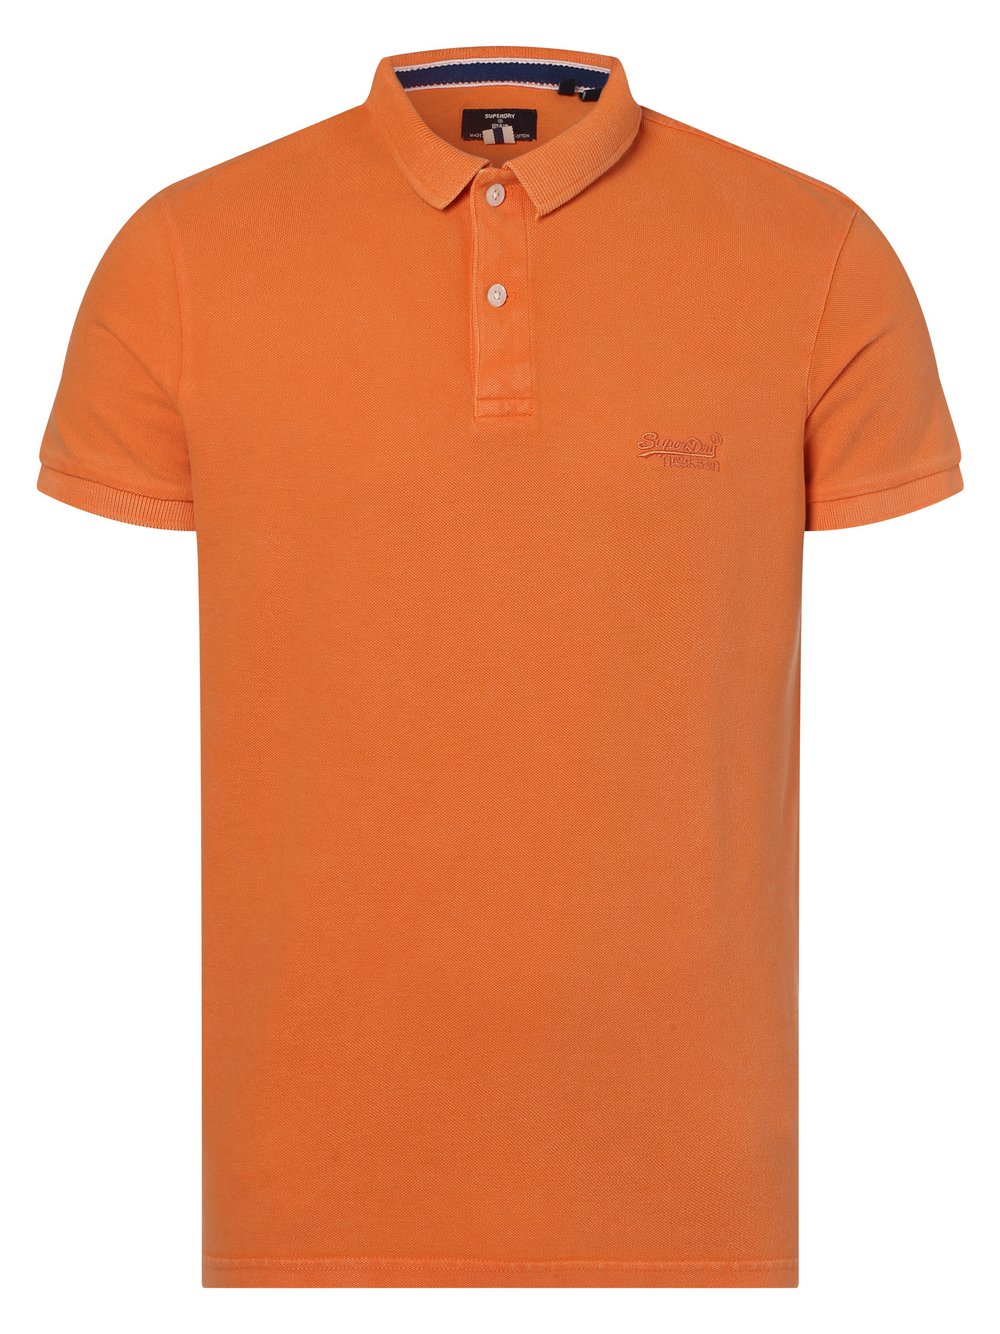 Superdry - Męska koszulka polo, pomarańczowy